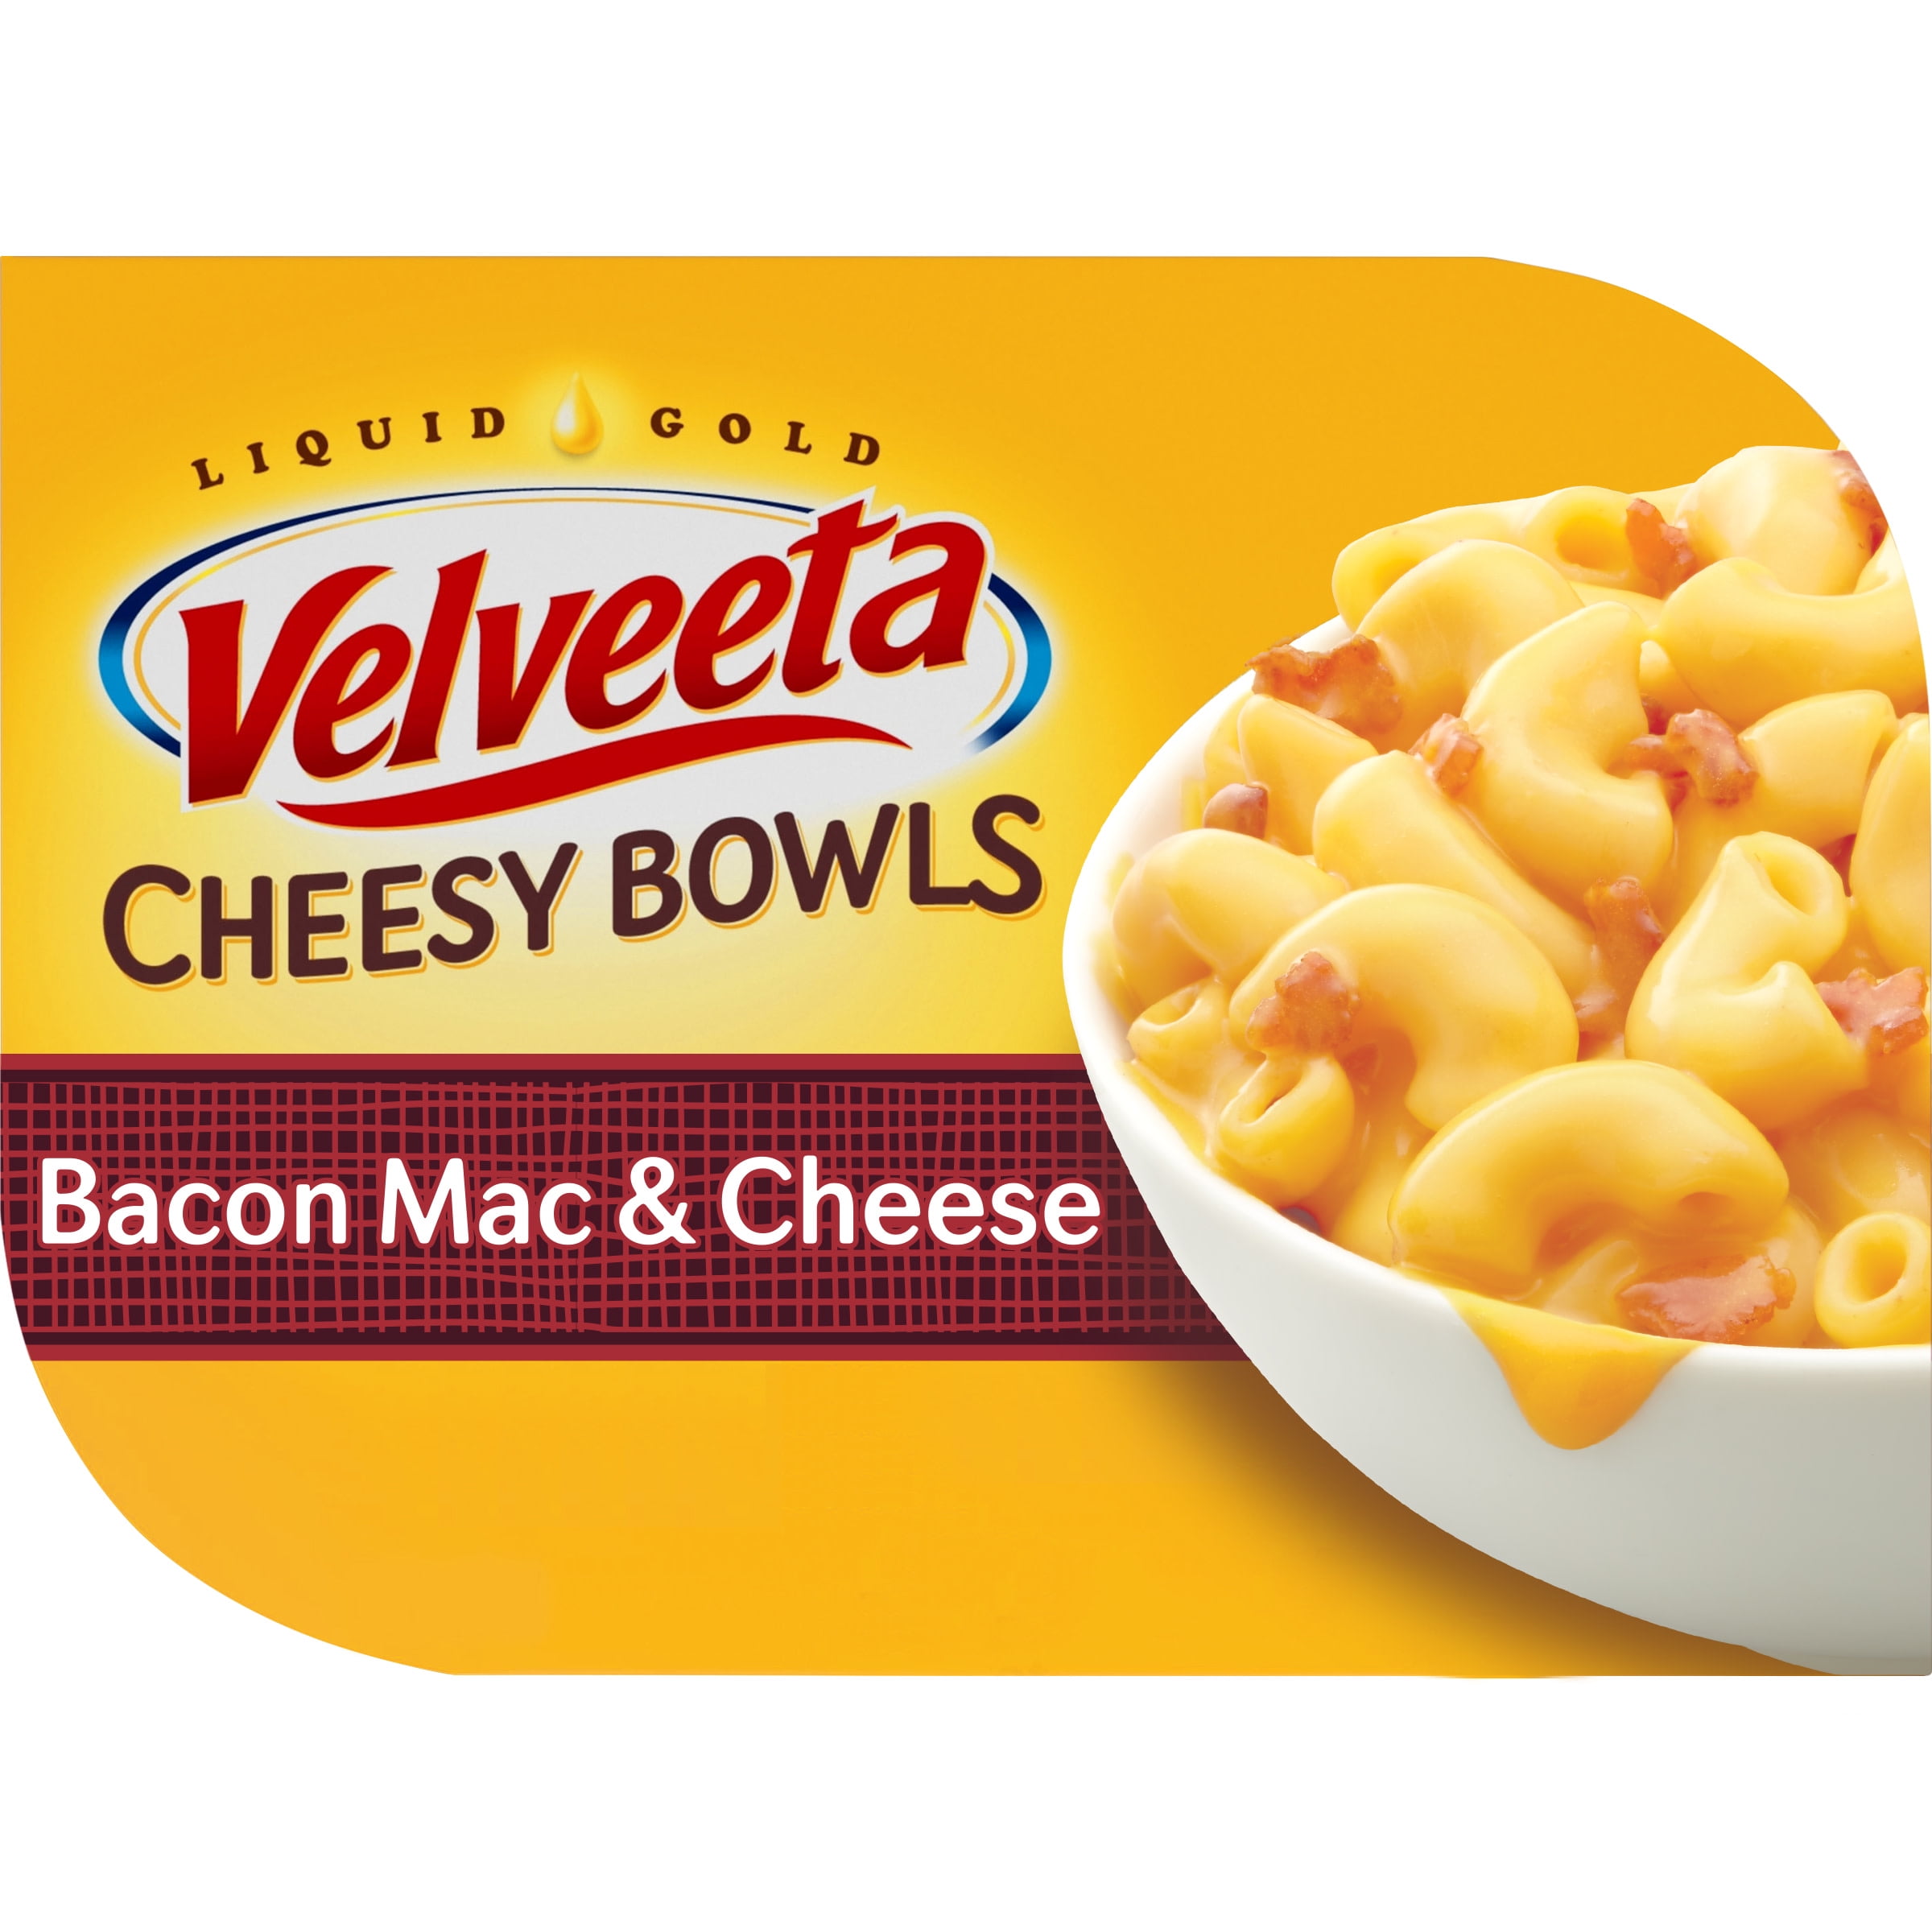 Velveeta Cheesy Bowls Bacon Mac & Cheese Microwave Meal, 9 oz Tray